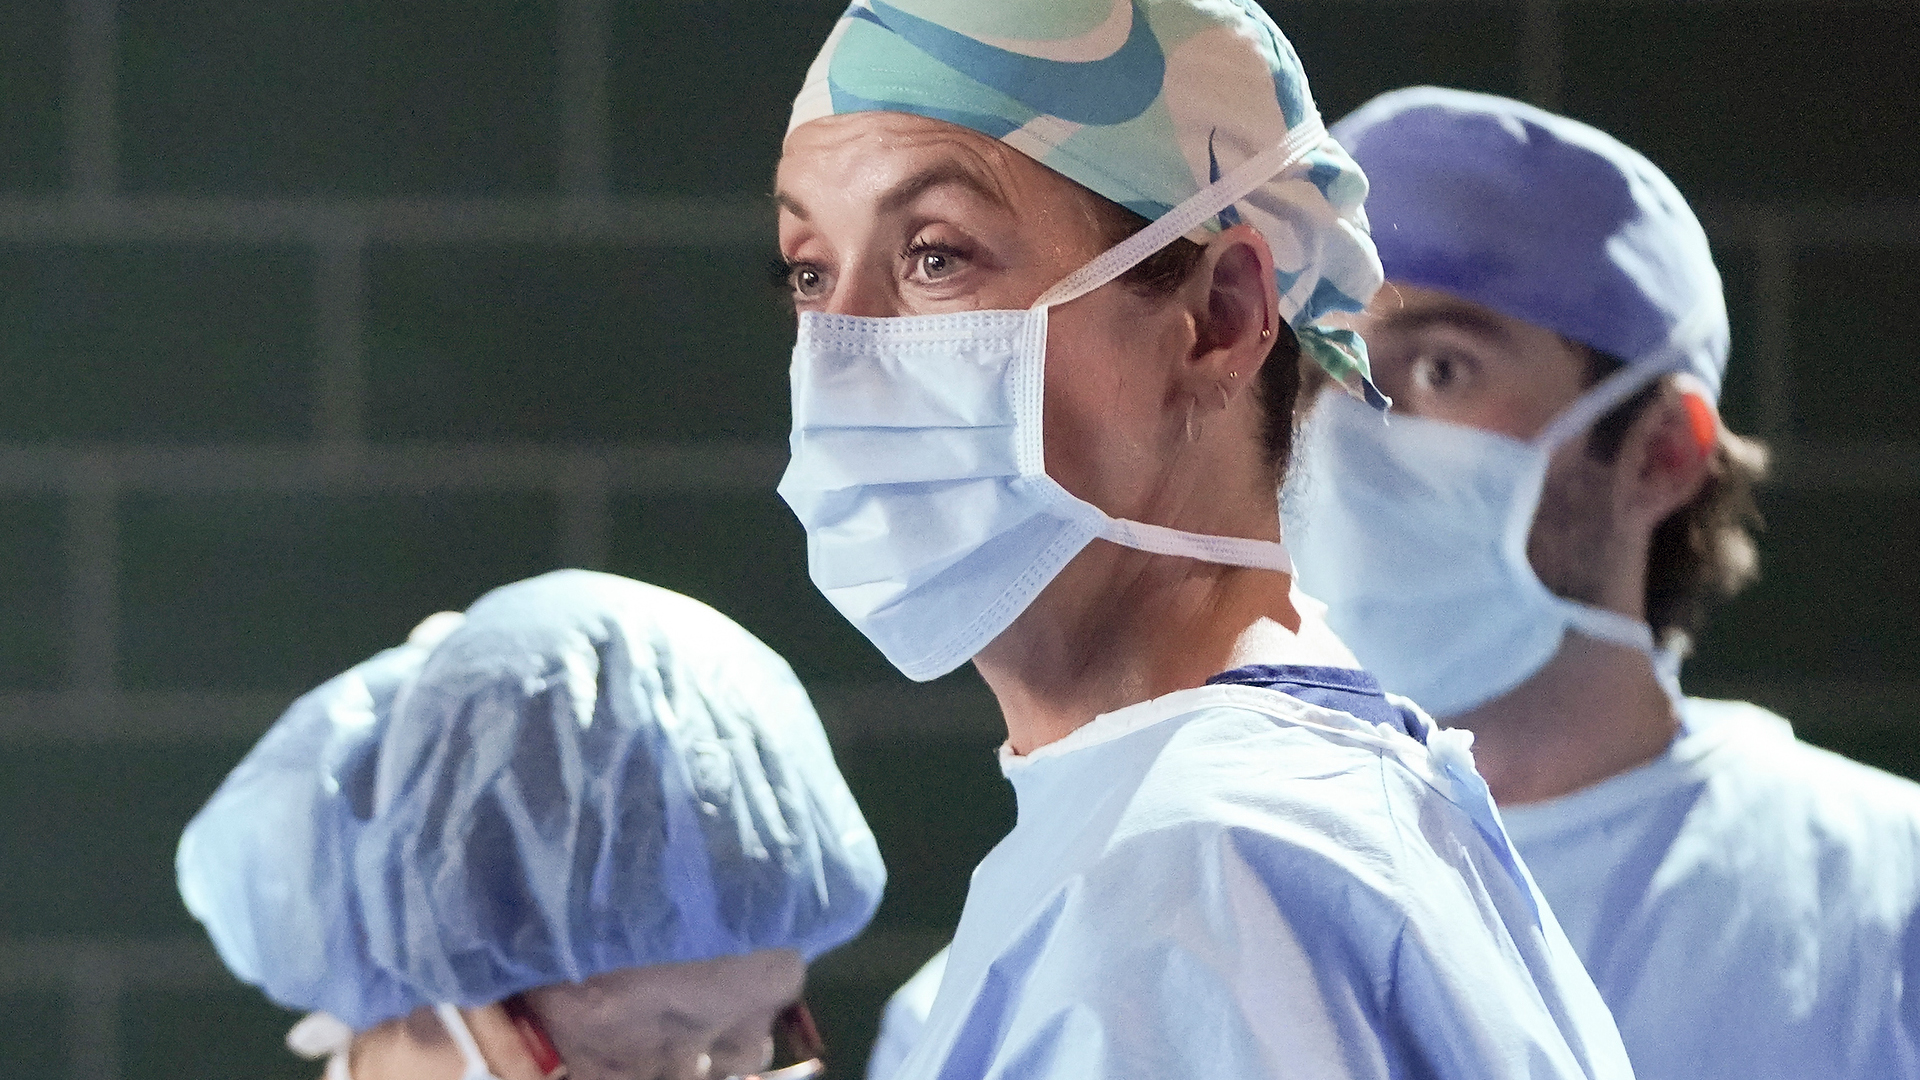 Kate Walsh as Addison Montgomery in scrubs in ‘Grey’s Anatomy’ Season 18 Episode 3